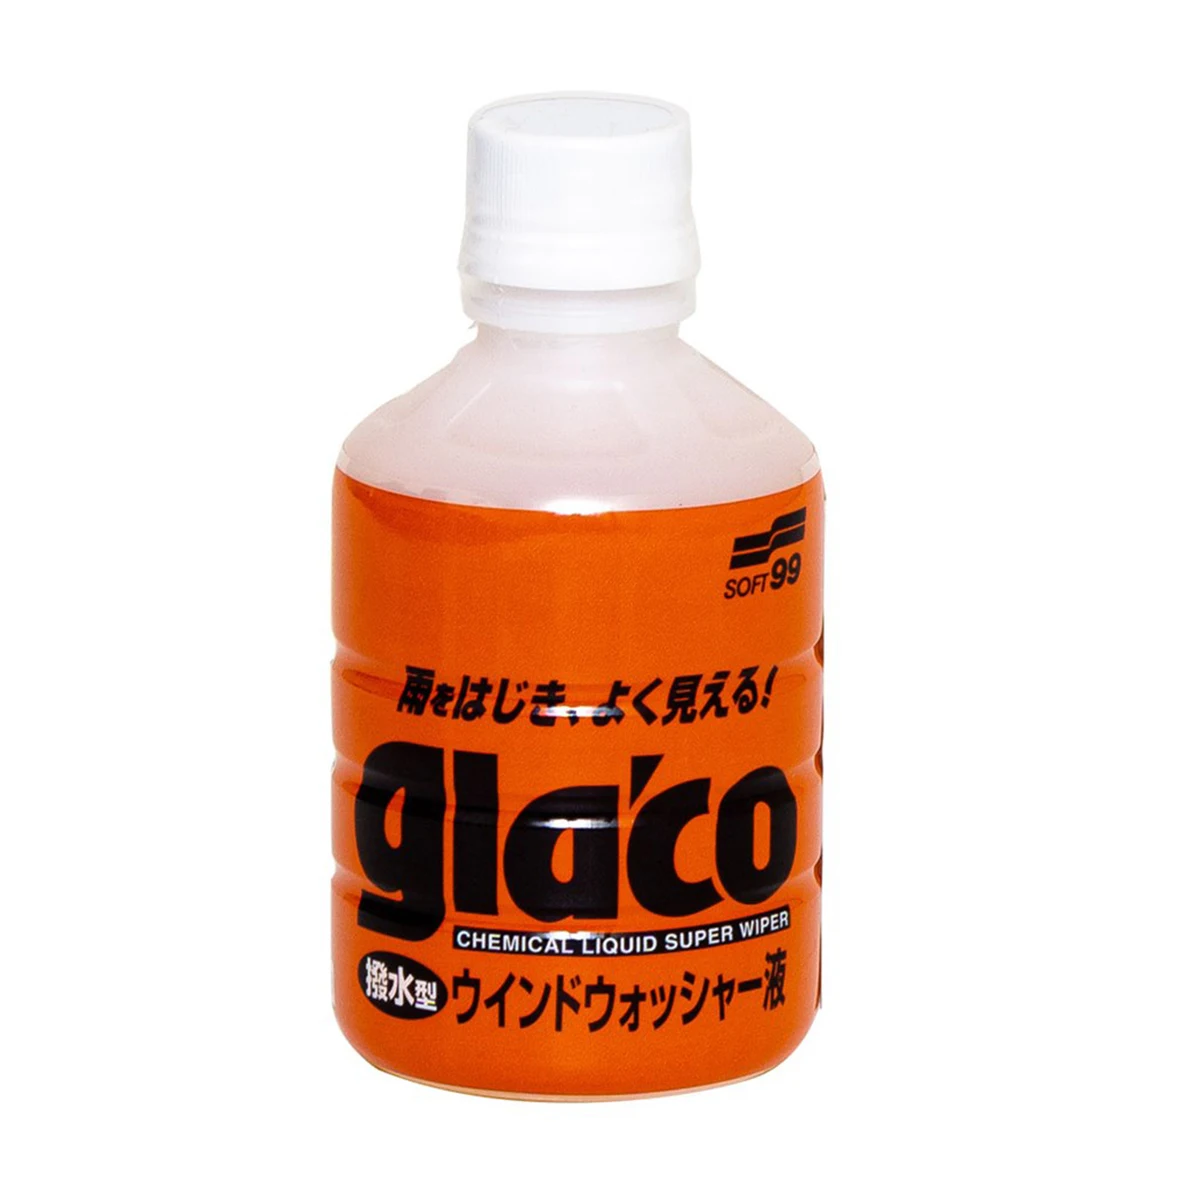 Soft99 Ultra Glaco Long last Car Windshield Glass Water Rain Repellent JDM  70 ml - AliExpress